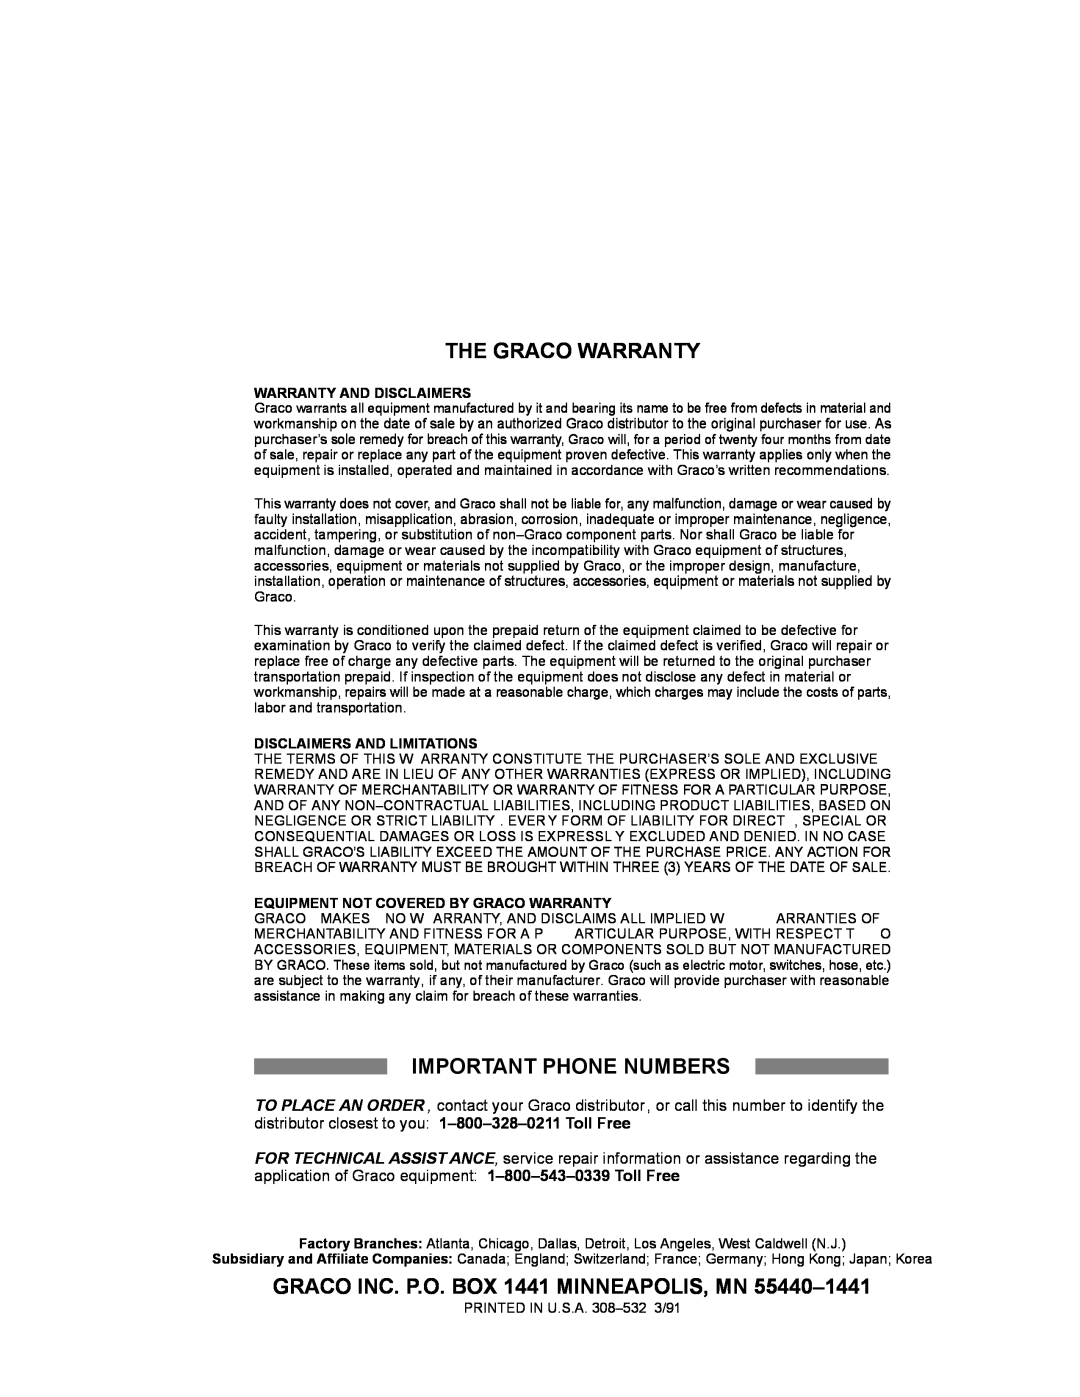 Graco Inc 308-532, 800-707, 800-706 The Graco Warranty, Important Phone Numbers, GRACO INC. P.O. BOX 1441 MINNEAPOLIS, MN 